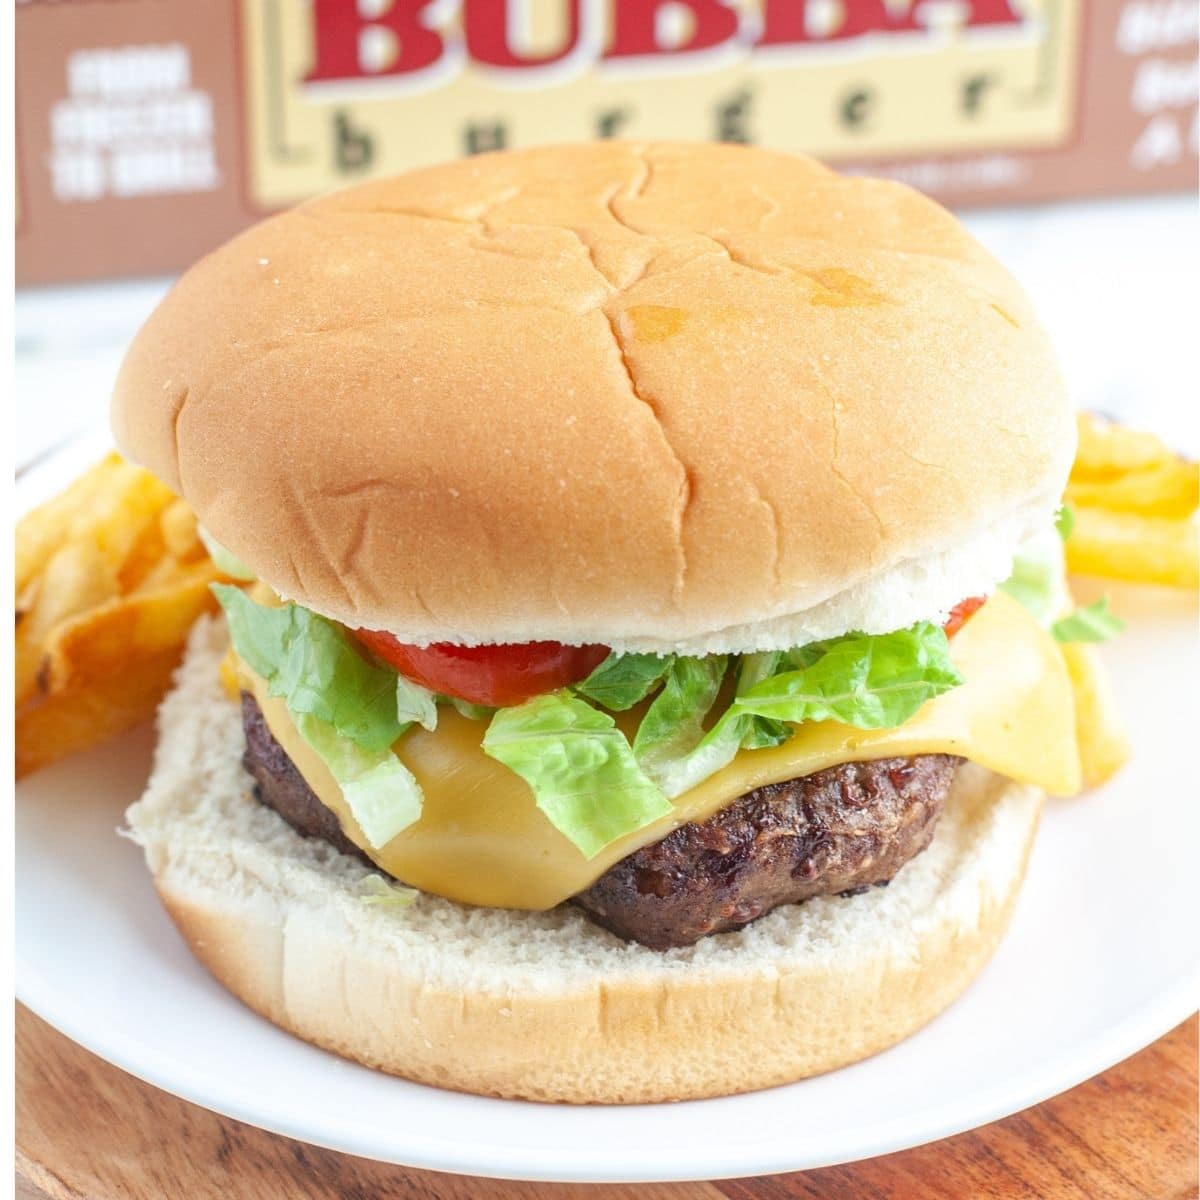 https://www.foodlovinfamily.com/wp-content/uploads/2022/01/bubba-burger-air-fryer.jpg